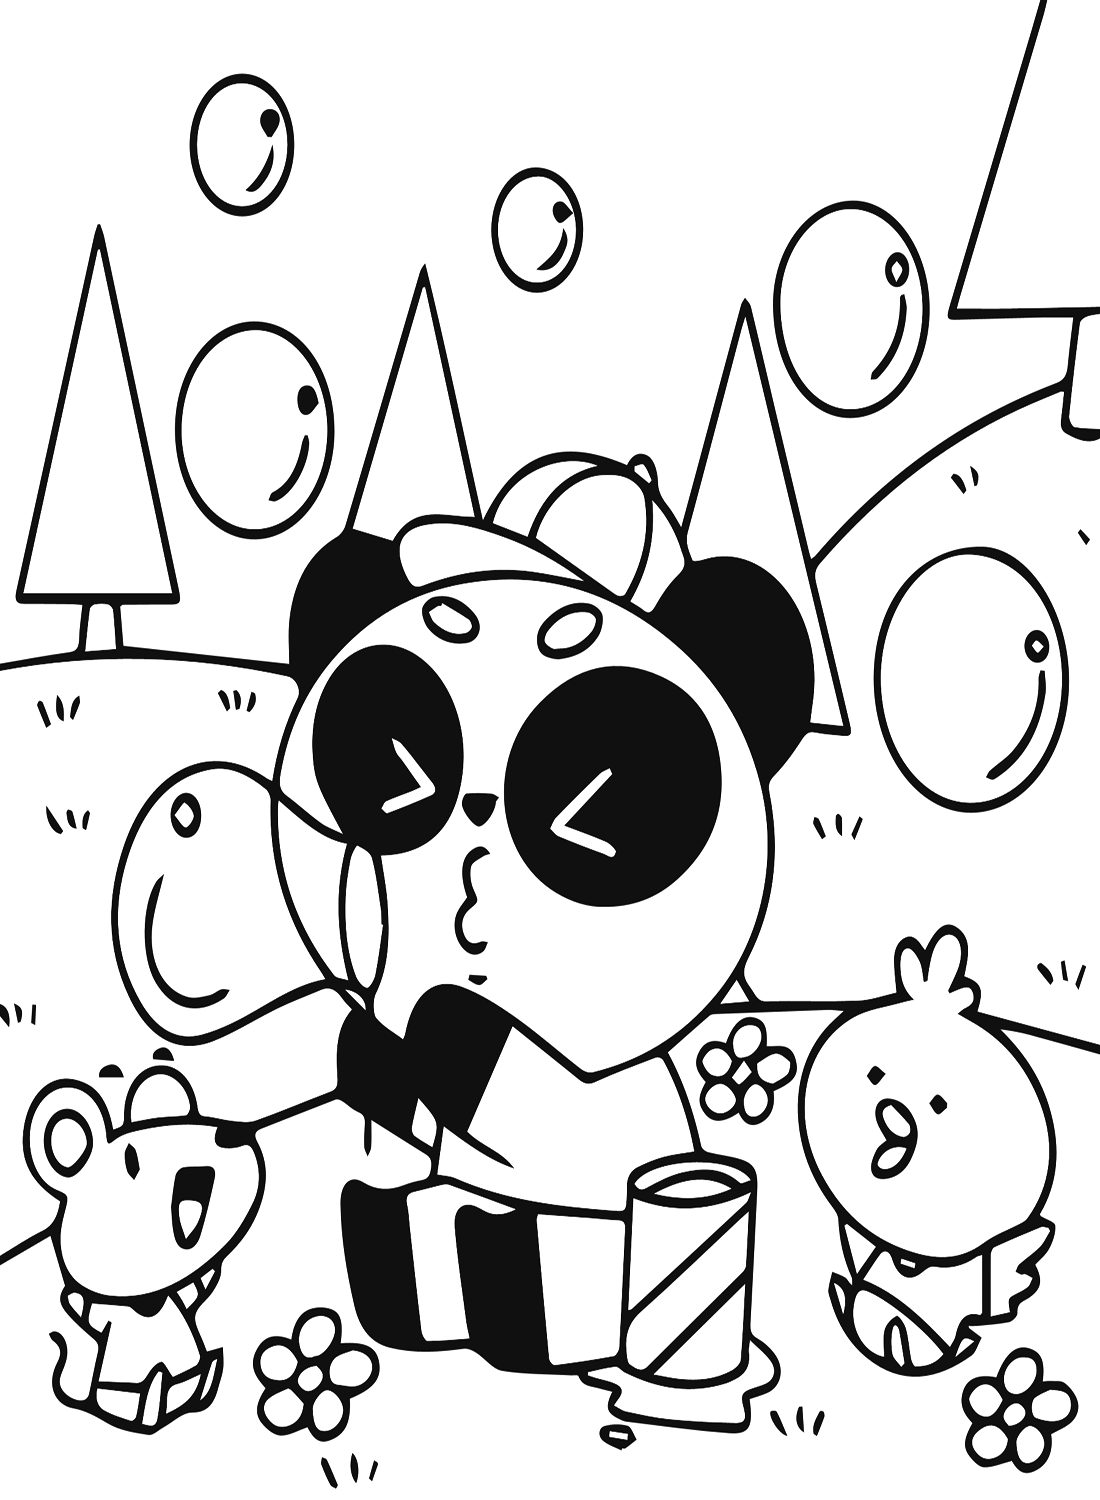 Kawaii Cartoon Animals Coloring Page